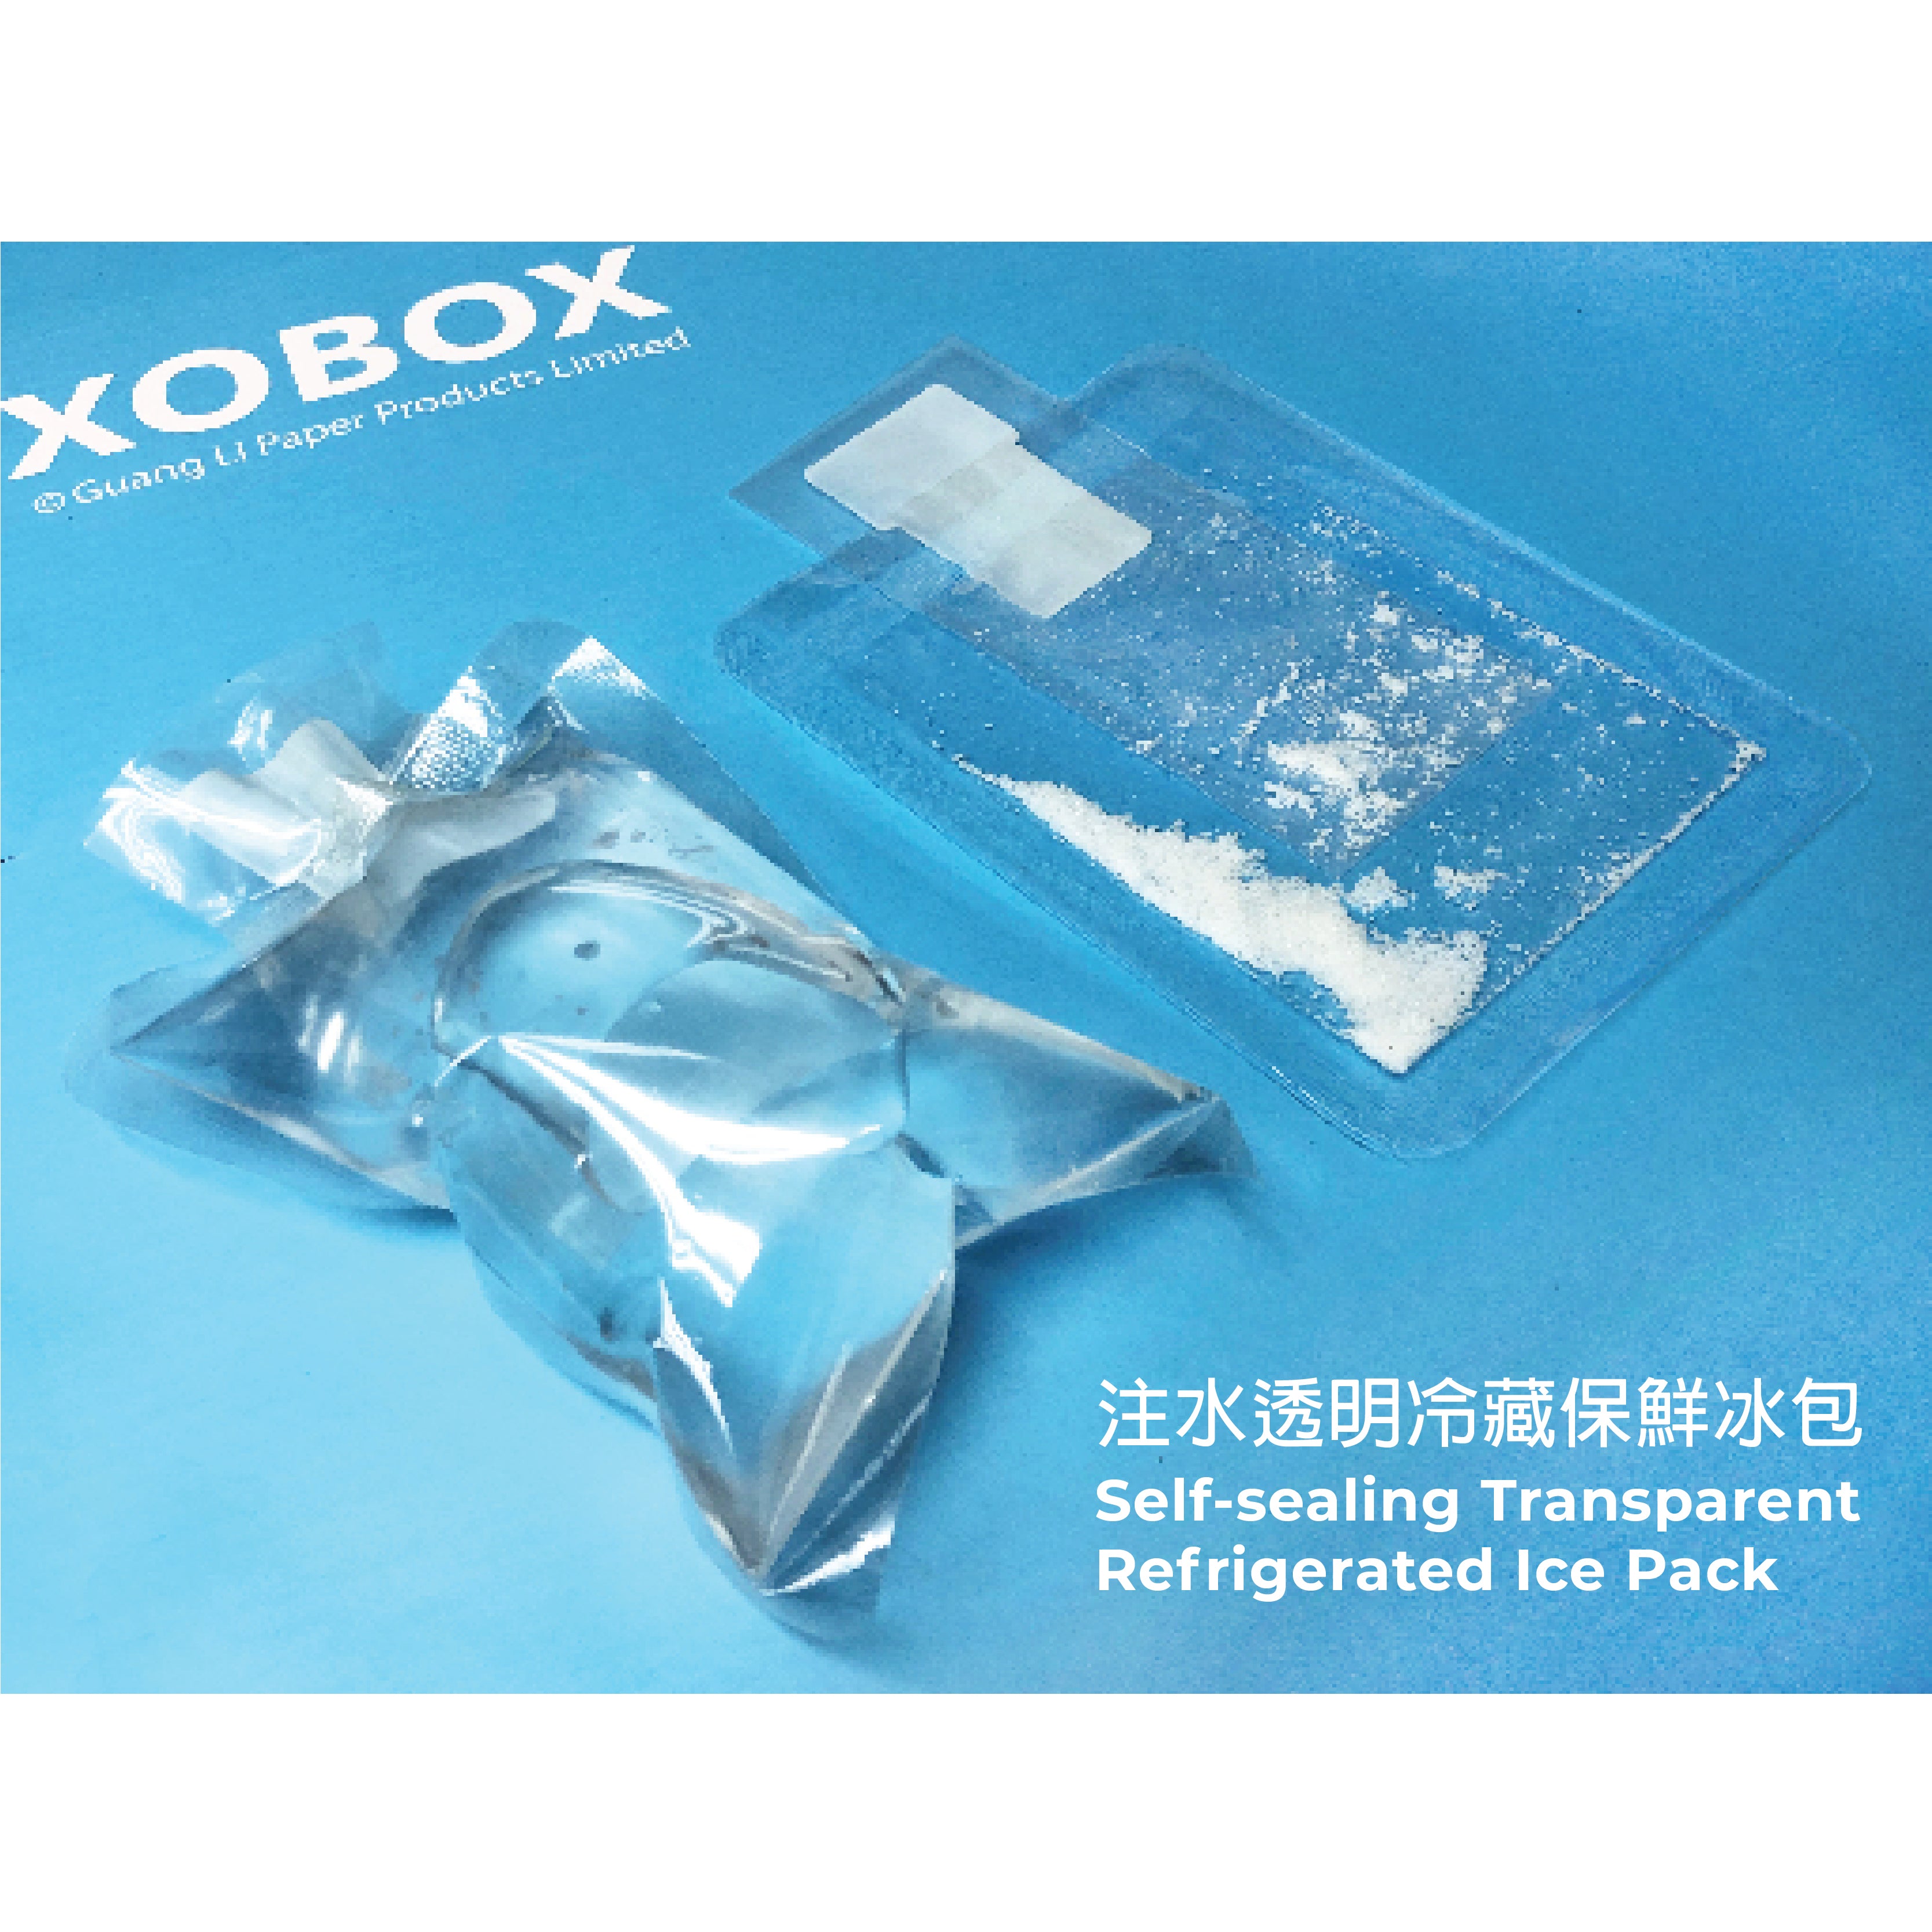 Self-sealing Transparent Refrigerated Ice Pack 注水透明保冷冰包